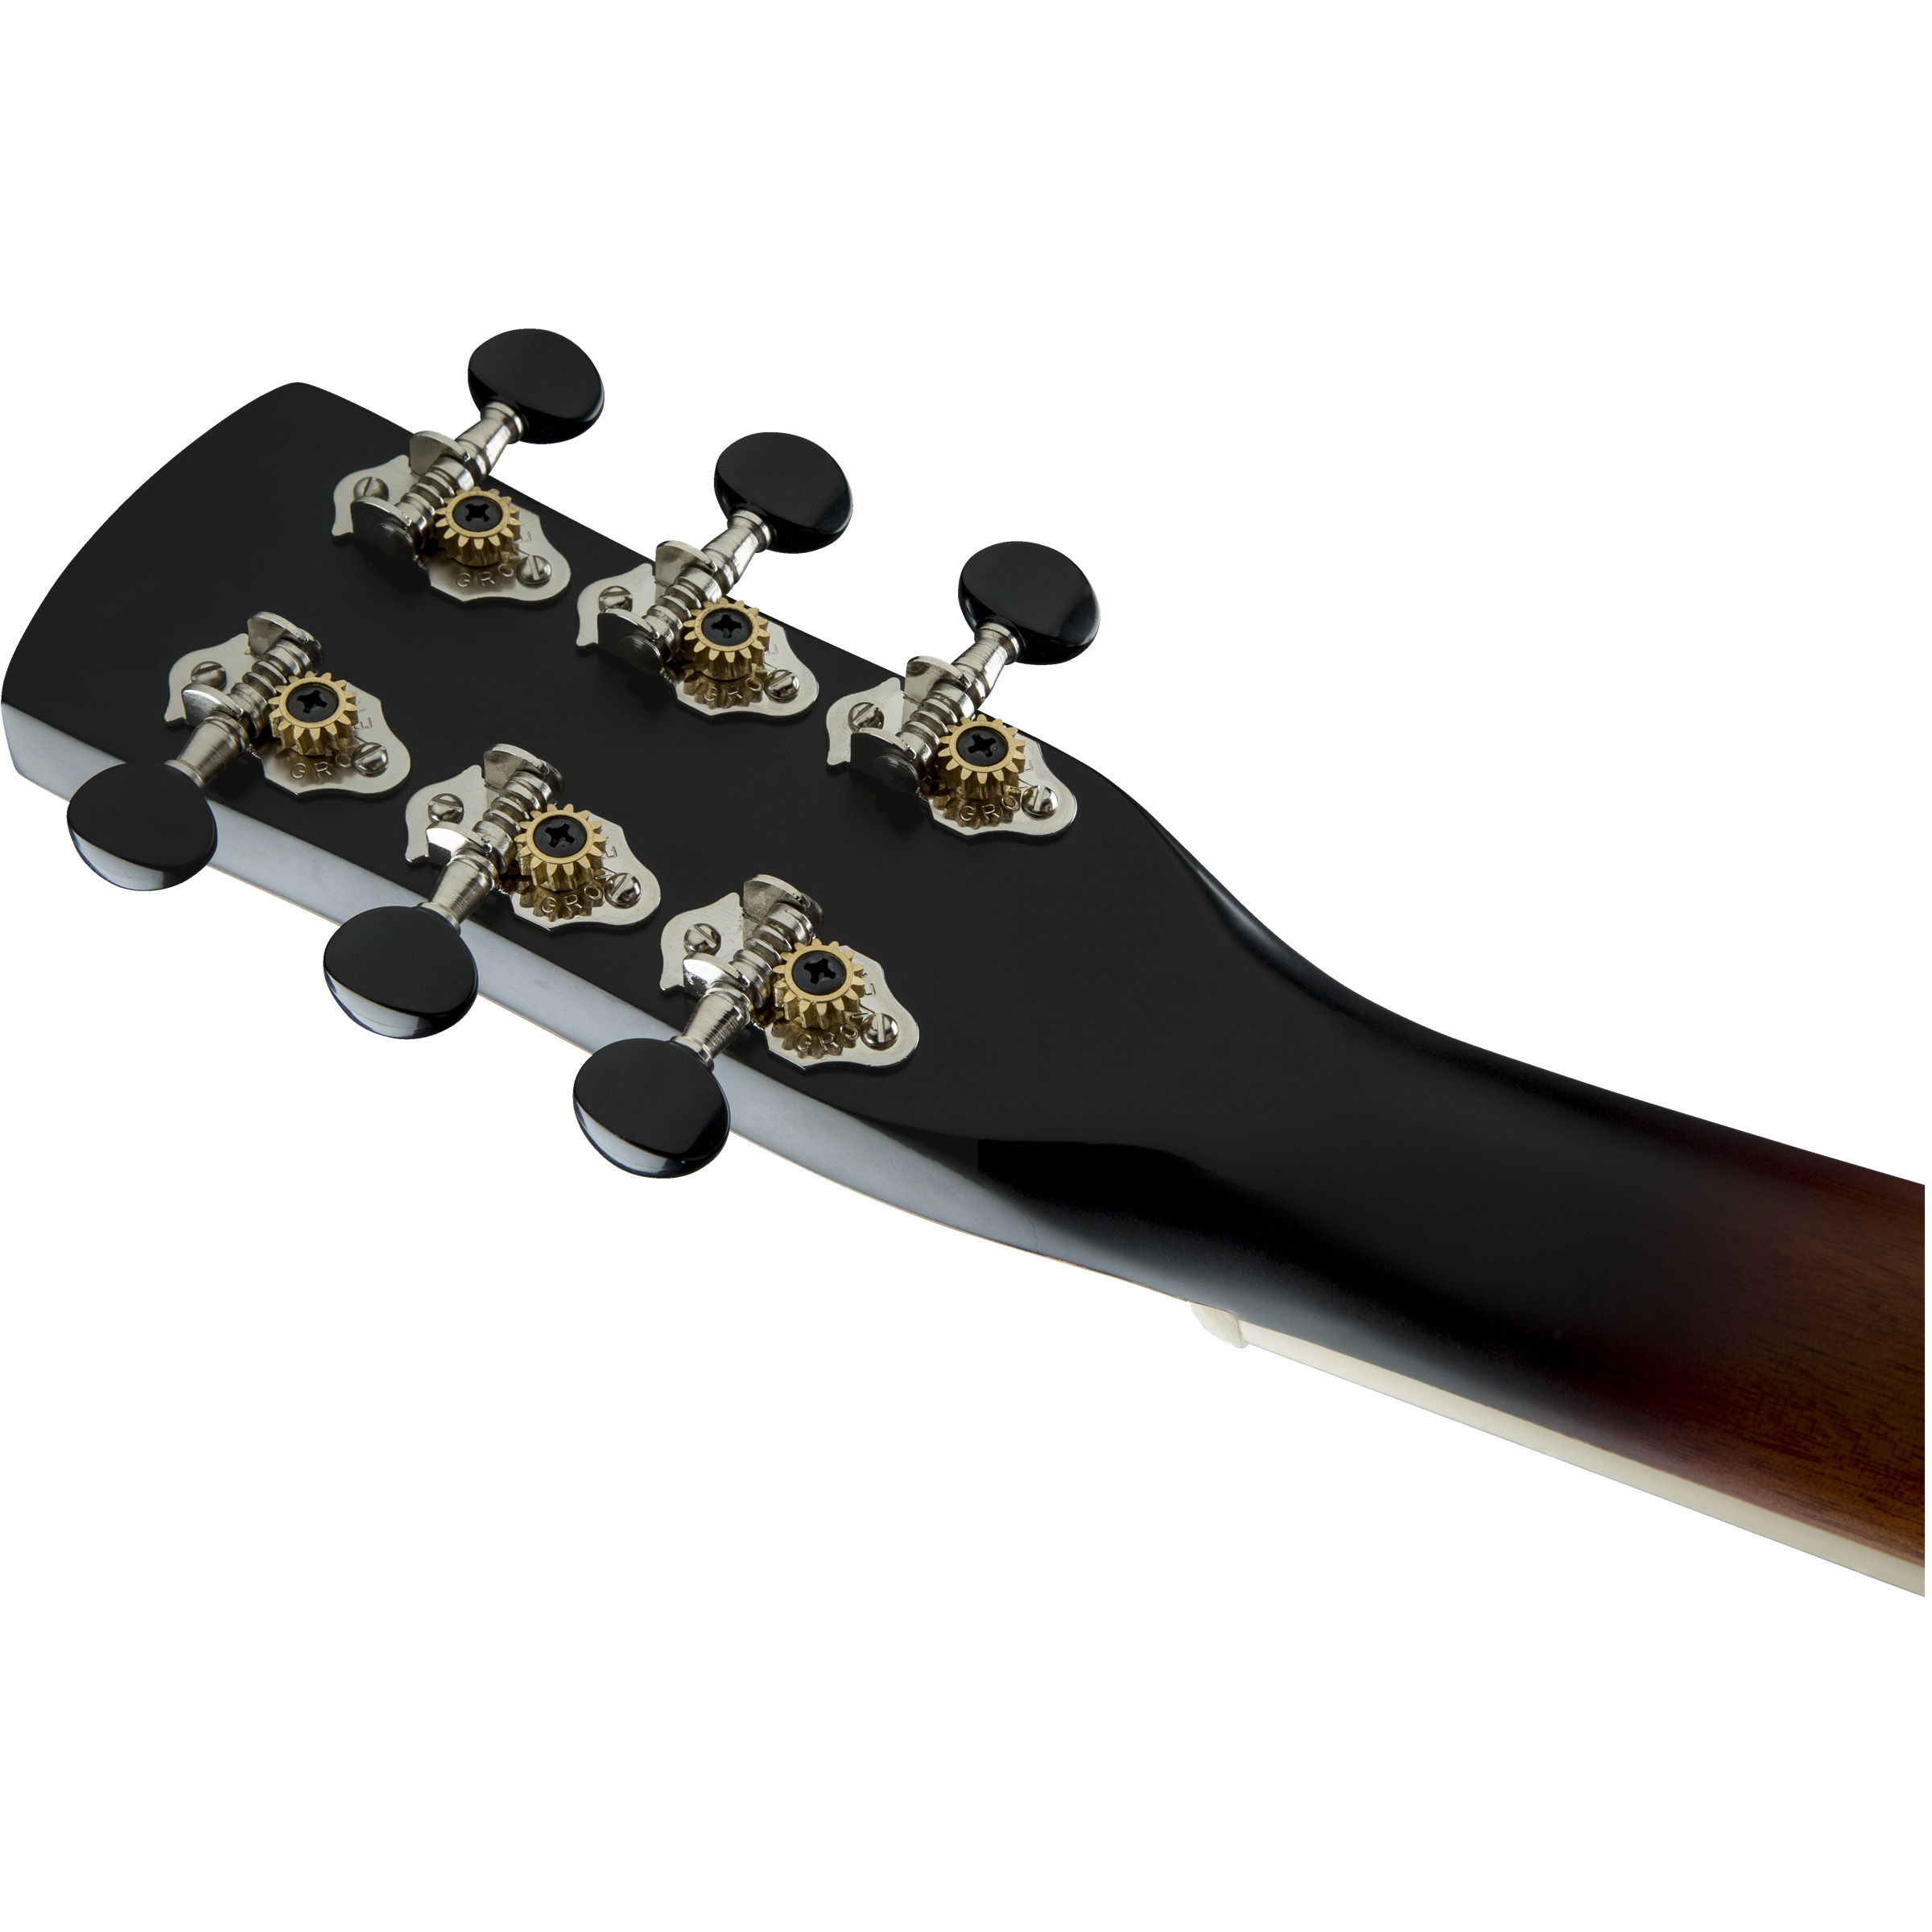 Gretsch G9240 Alligator™ Round-Neck, Mahogany Body Biscuit Cone Resonator Guitar, 2-Color Sunburst Гитары акустические